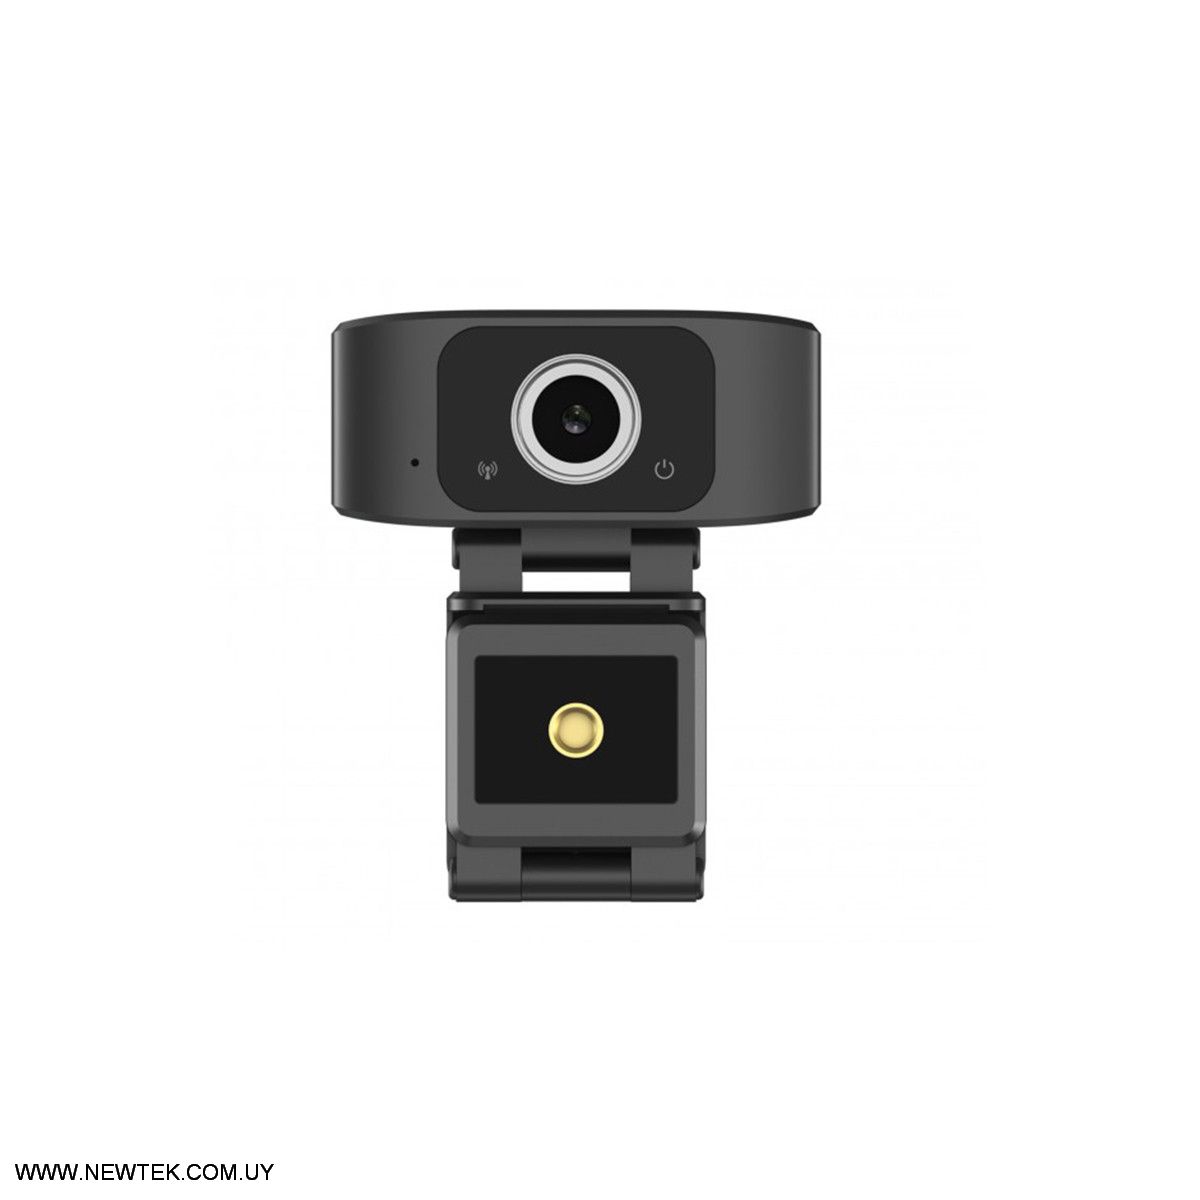 Web Cam Vidlok W77 FULL HD 1080p Camara Web Para PC Con conexion USB y Microfono